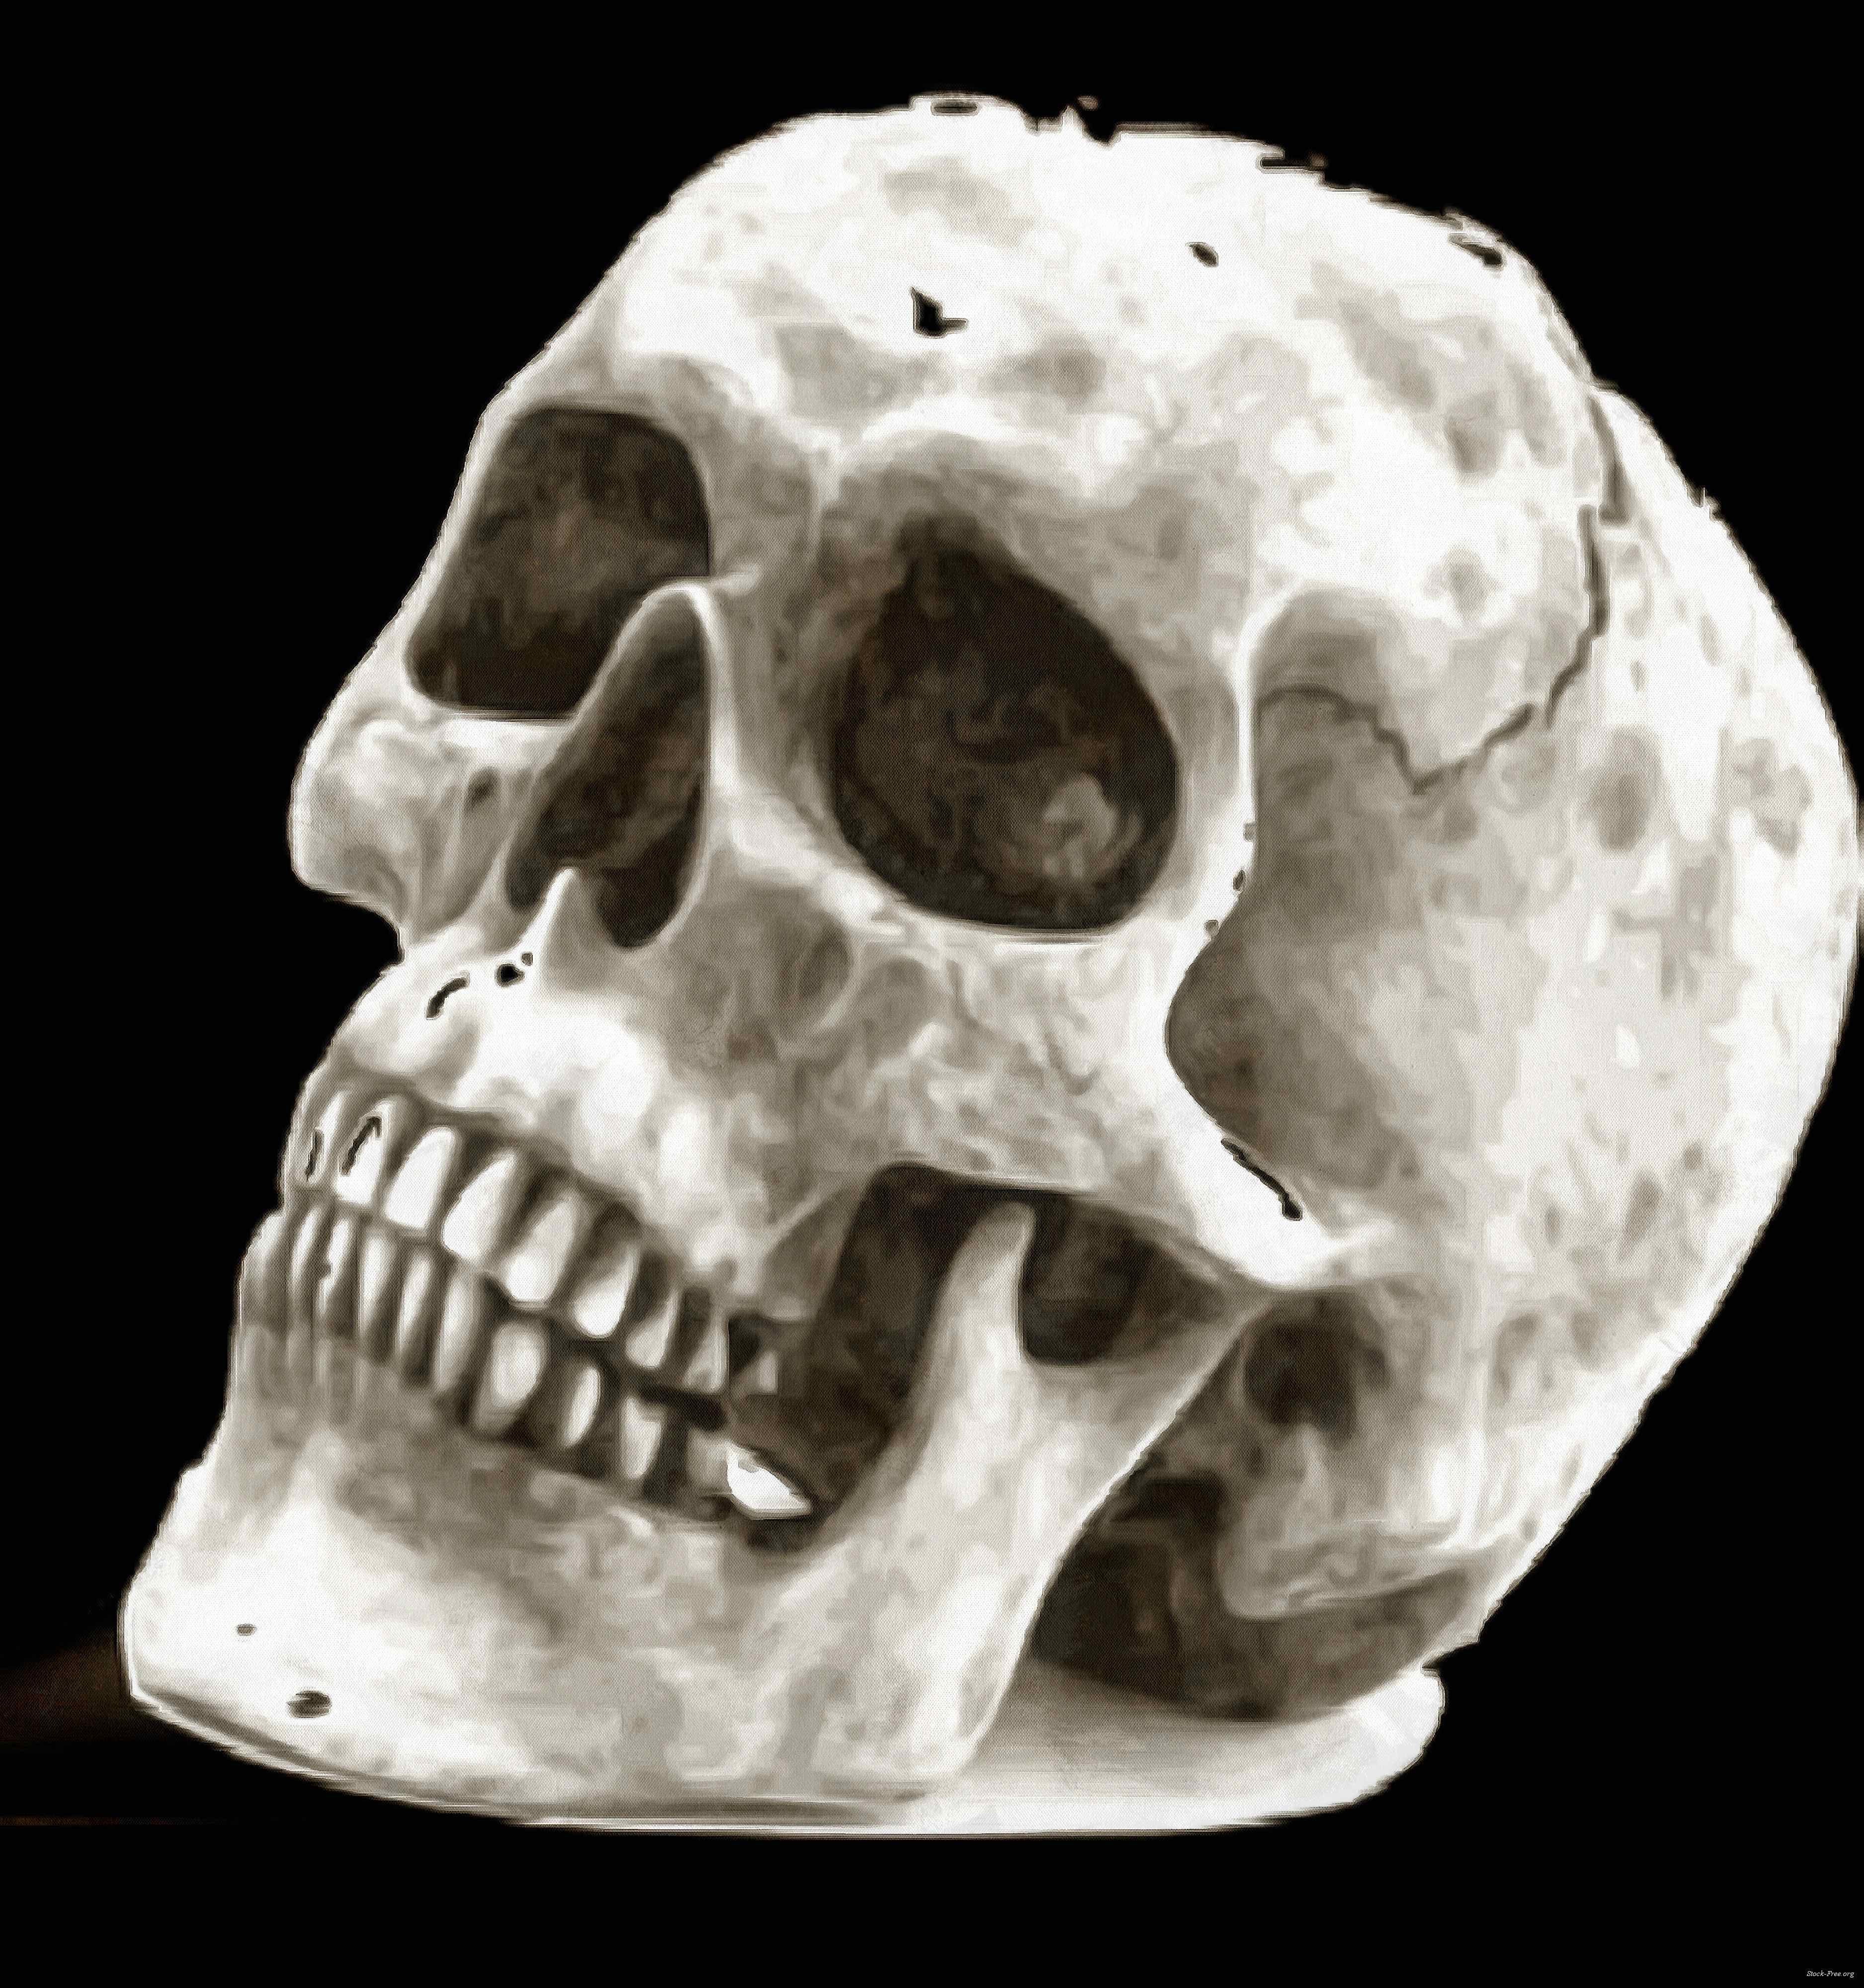 skull, head, bones, horror, skeleton, fear, smile, halloween - halloween free image, free images, public domain images, stock free images, download image for free, halloween stock free images